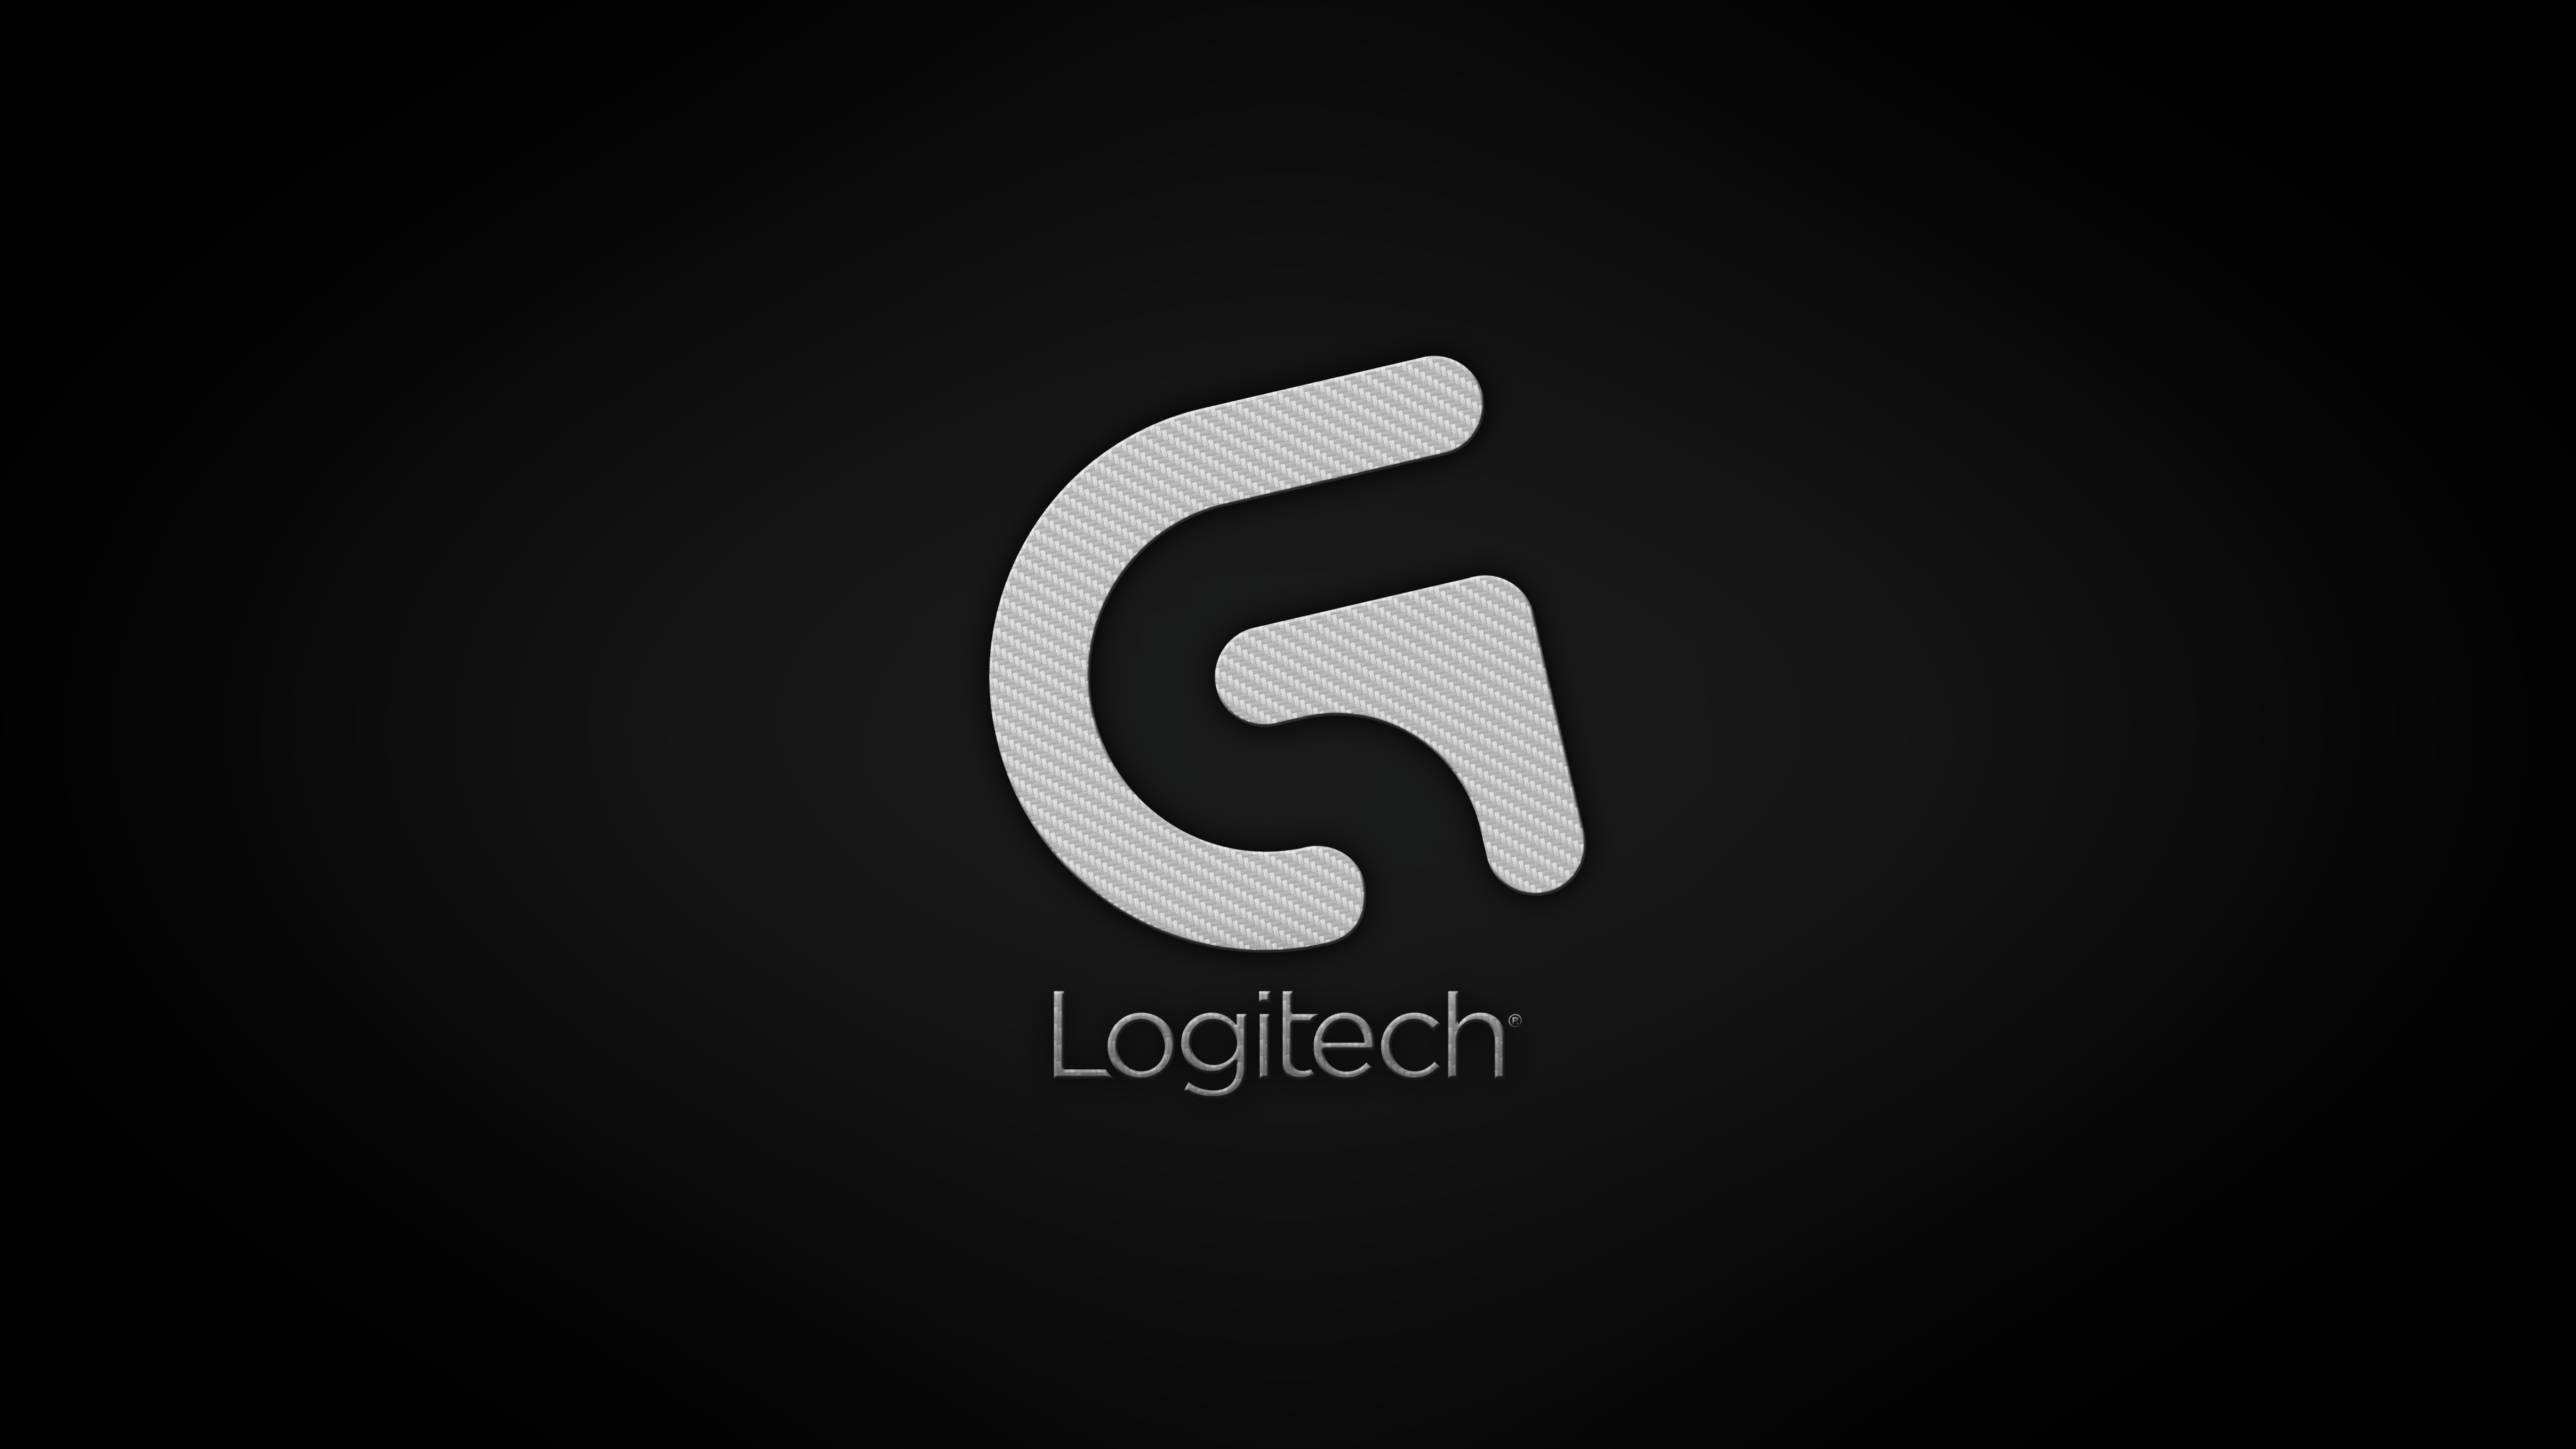 Logitech Brand Logo Wallpaper. Logo HD Wallpaper